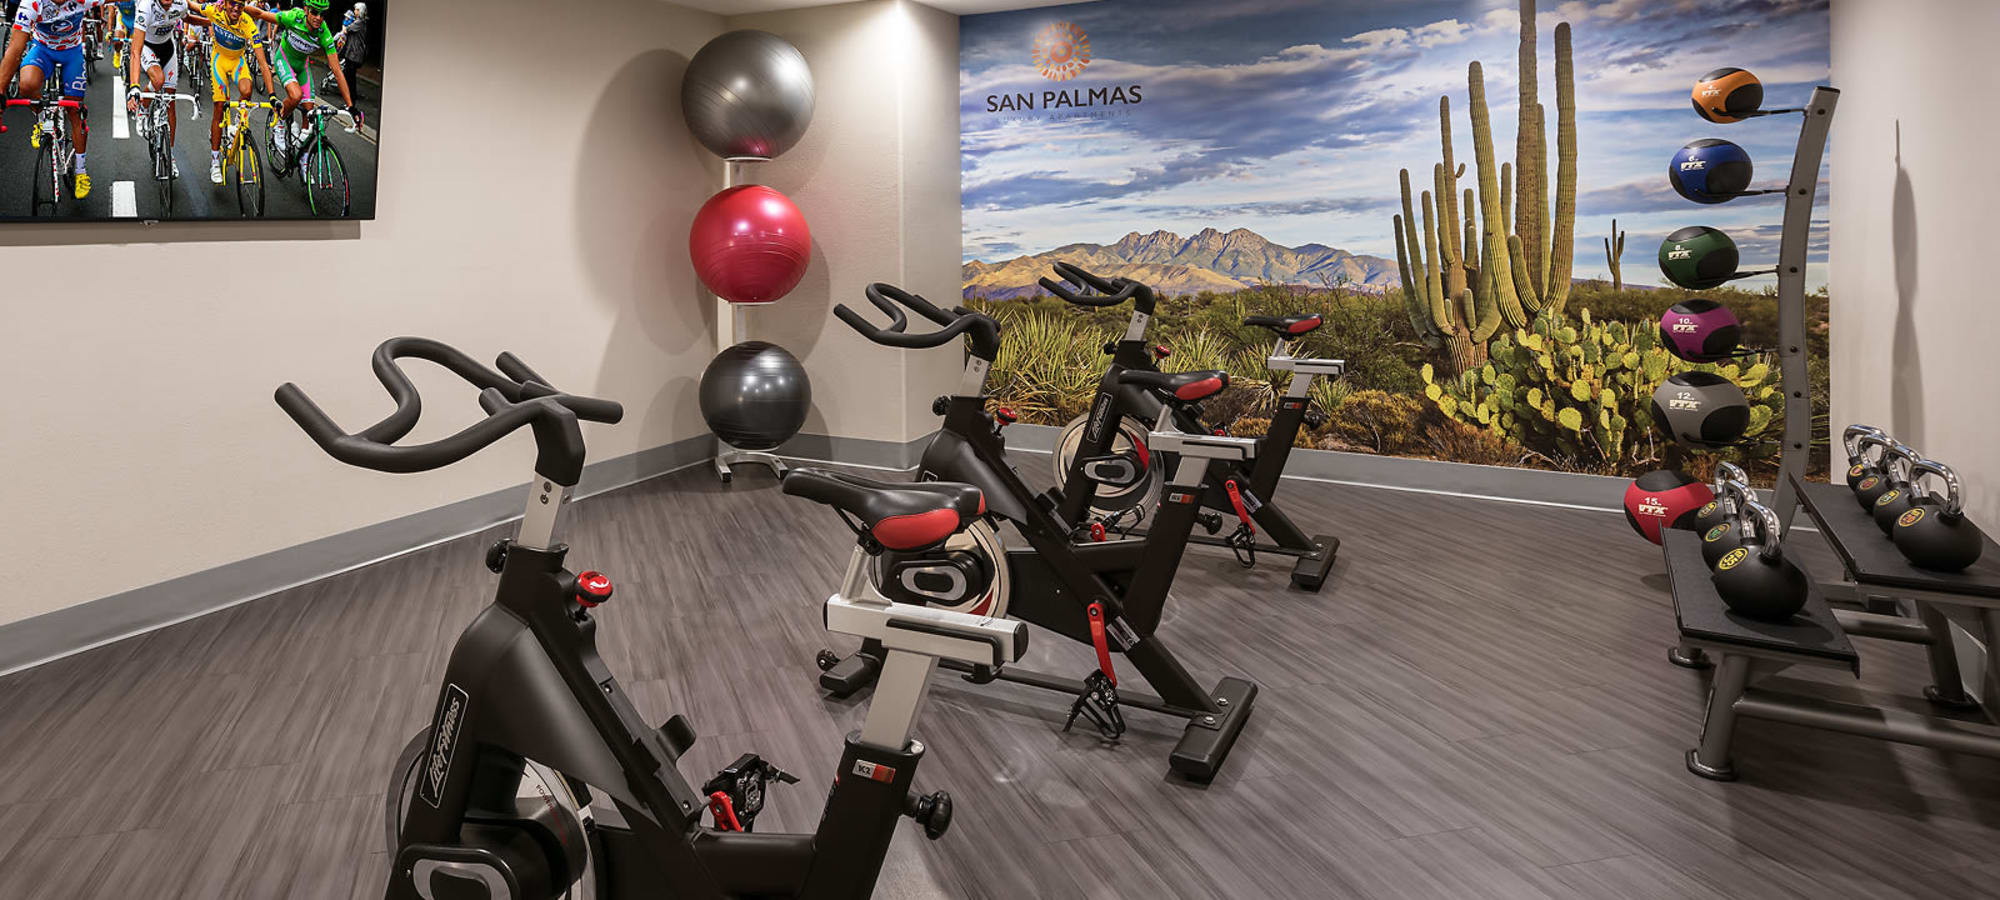 Spin room with bikes at San Palmas in Chandler, Arizona